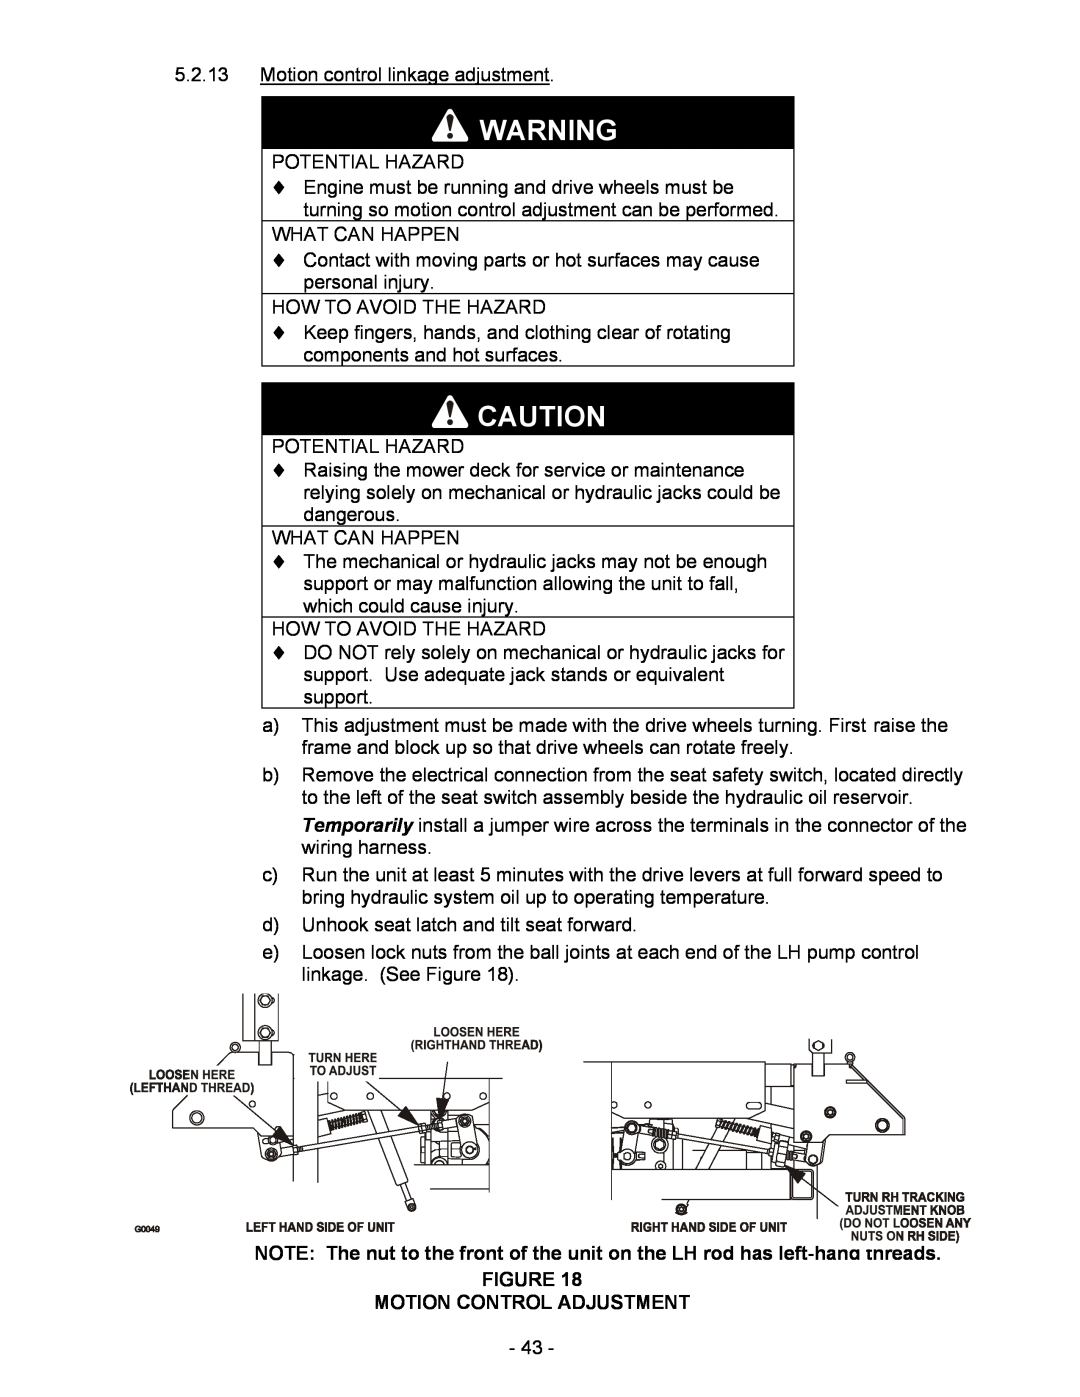 Exmark Lazer HP manual Motion Control Adjustment 